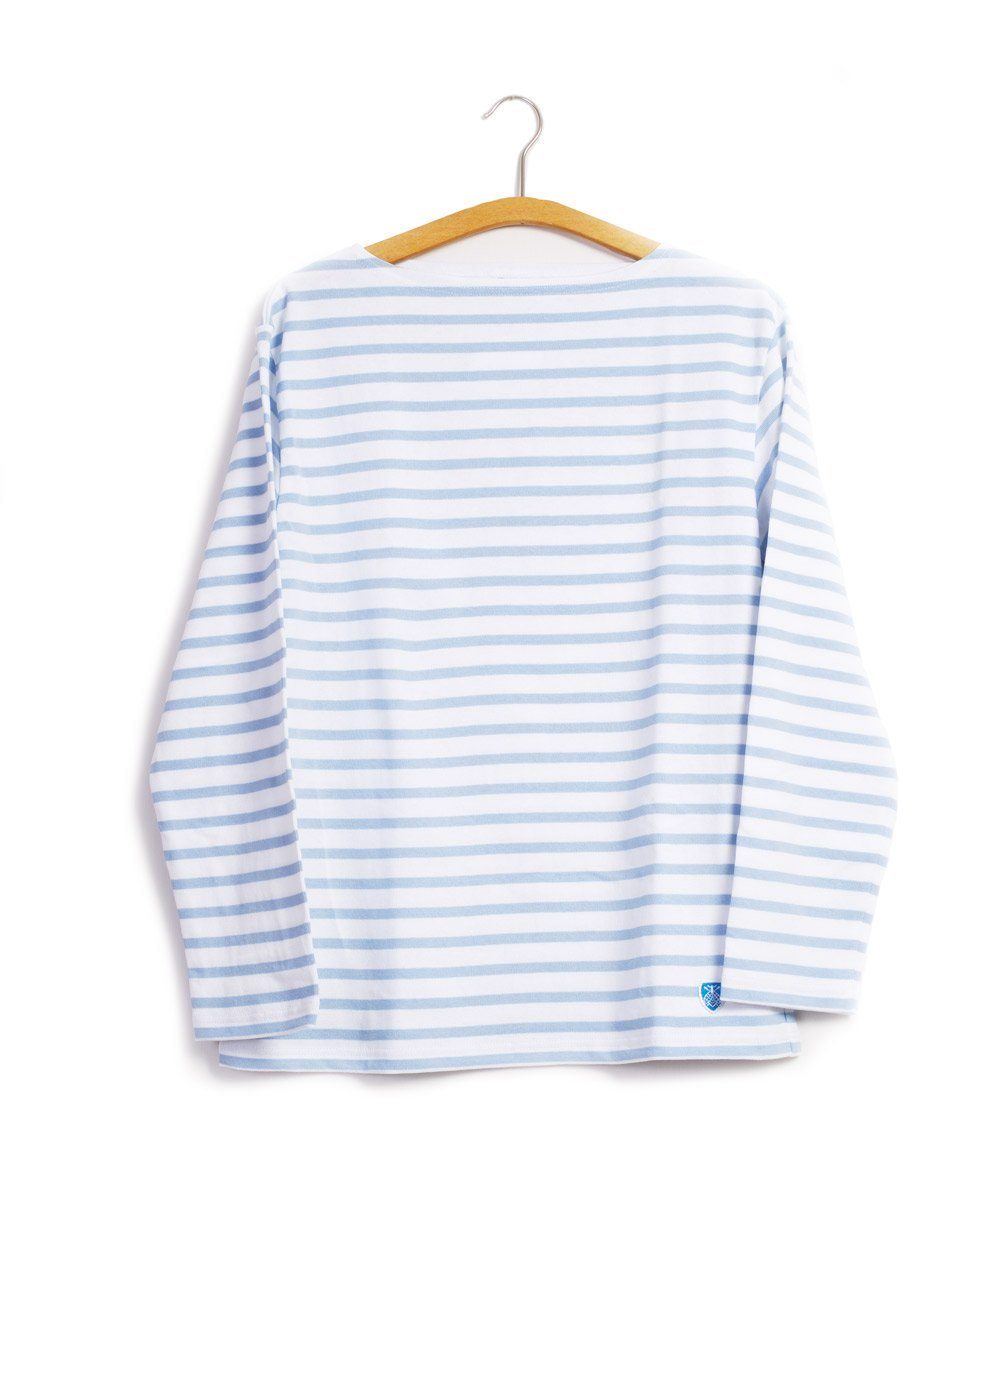 ORCIVAL - MARINE NATIONALE | Striped T-shirt | Light Blue White | €80 - HANSEN Garments